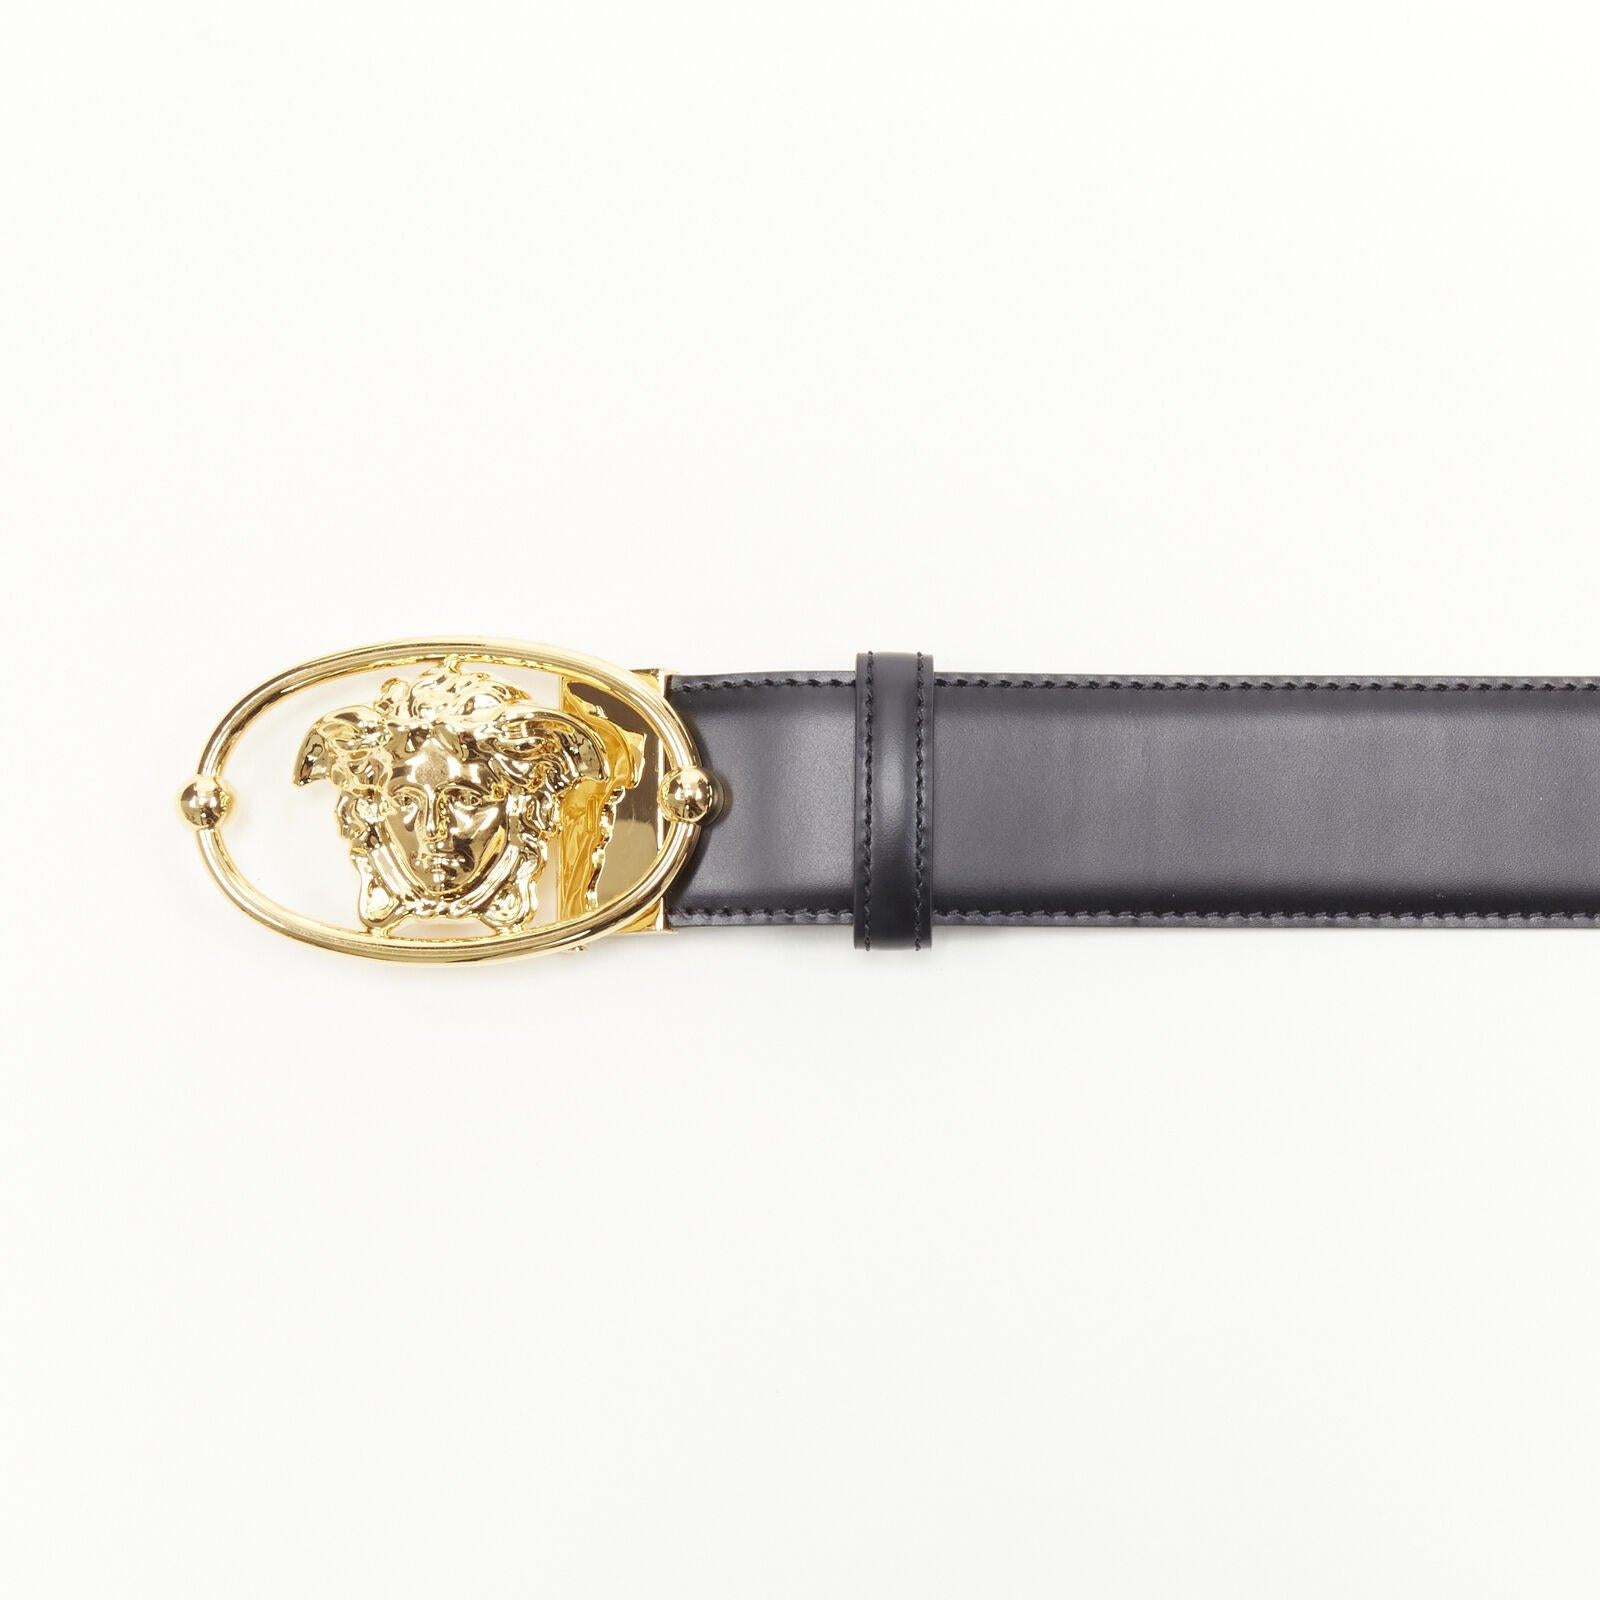 VERSACE La Medusa Insignia gold oval buckle black leather belt 100cm 38-42